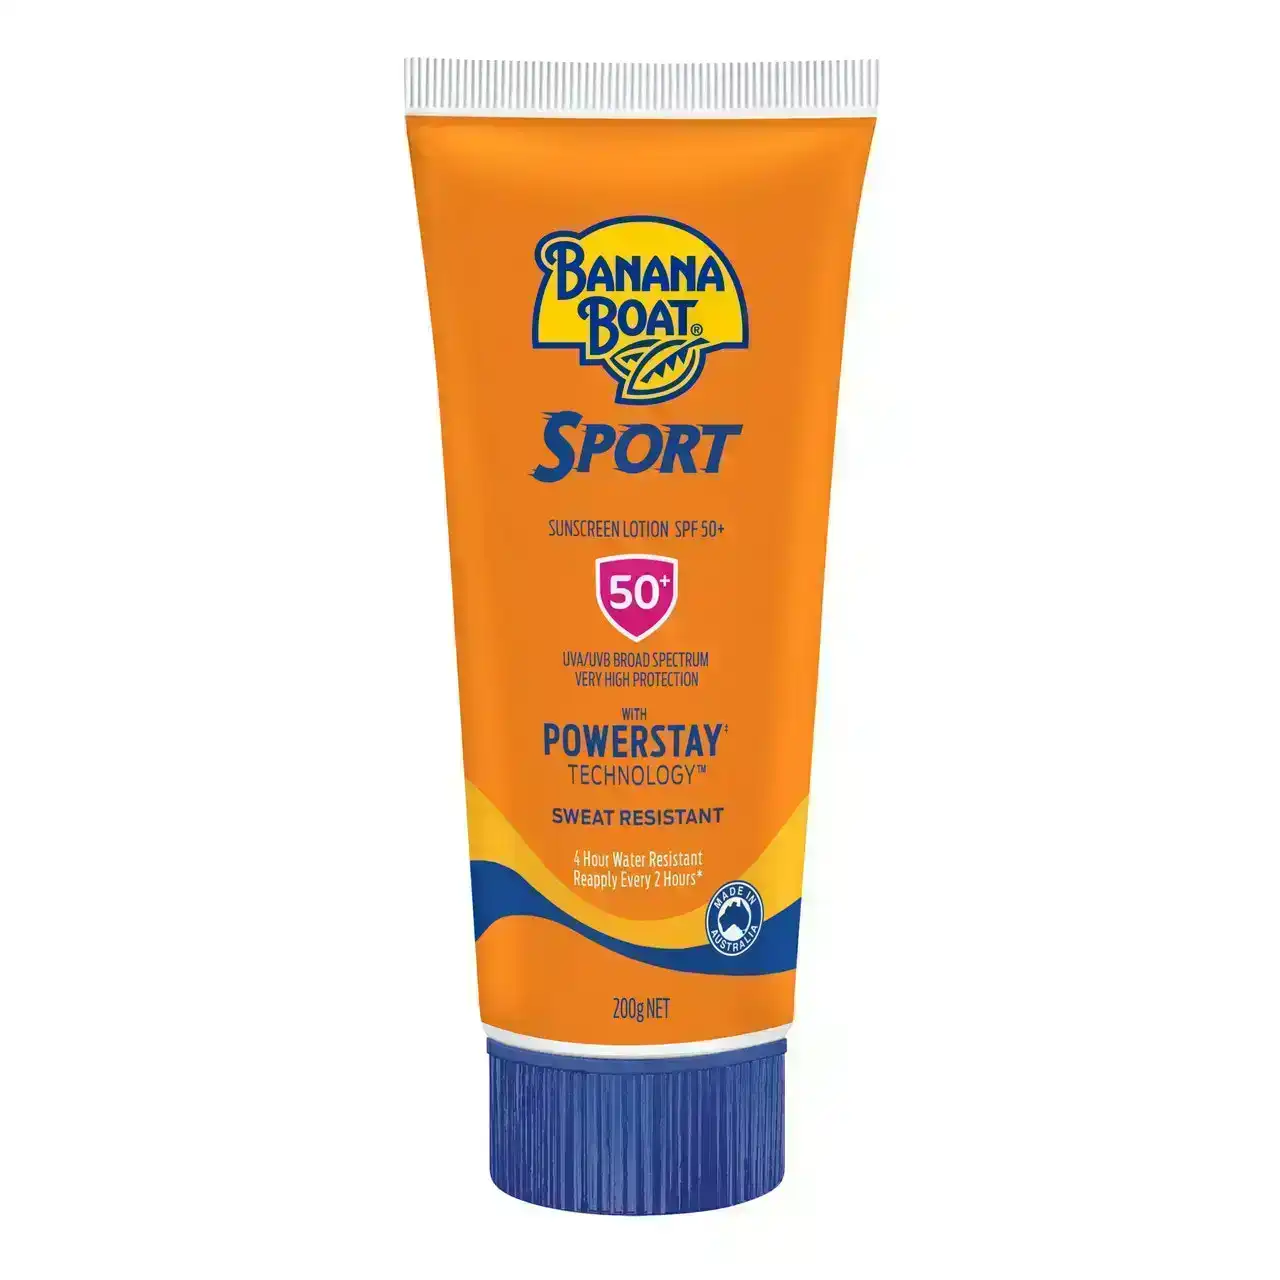 Banana Boat Sport Sunscreen Lotion SPF 50+ 200g